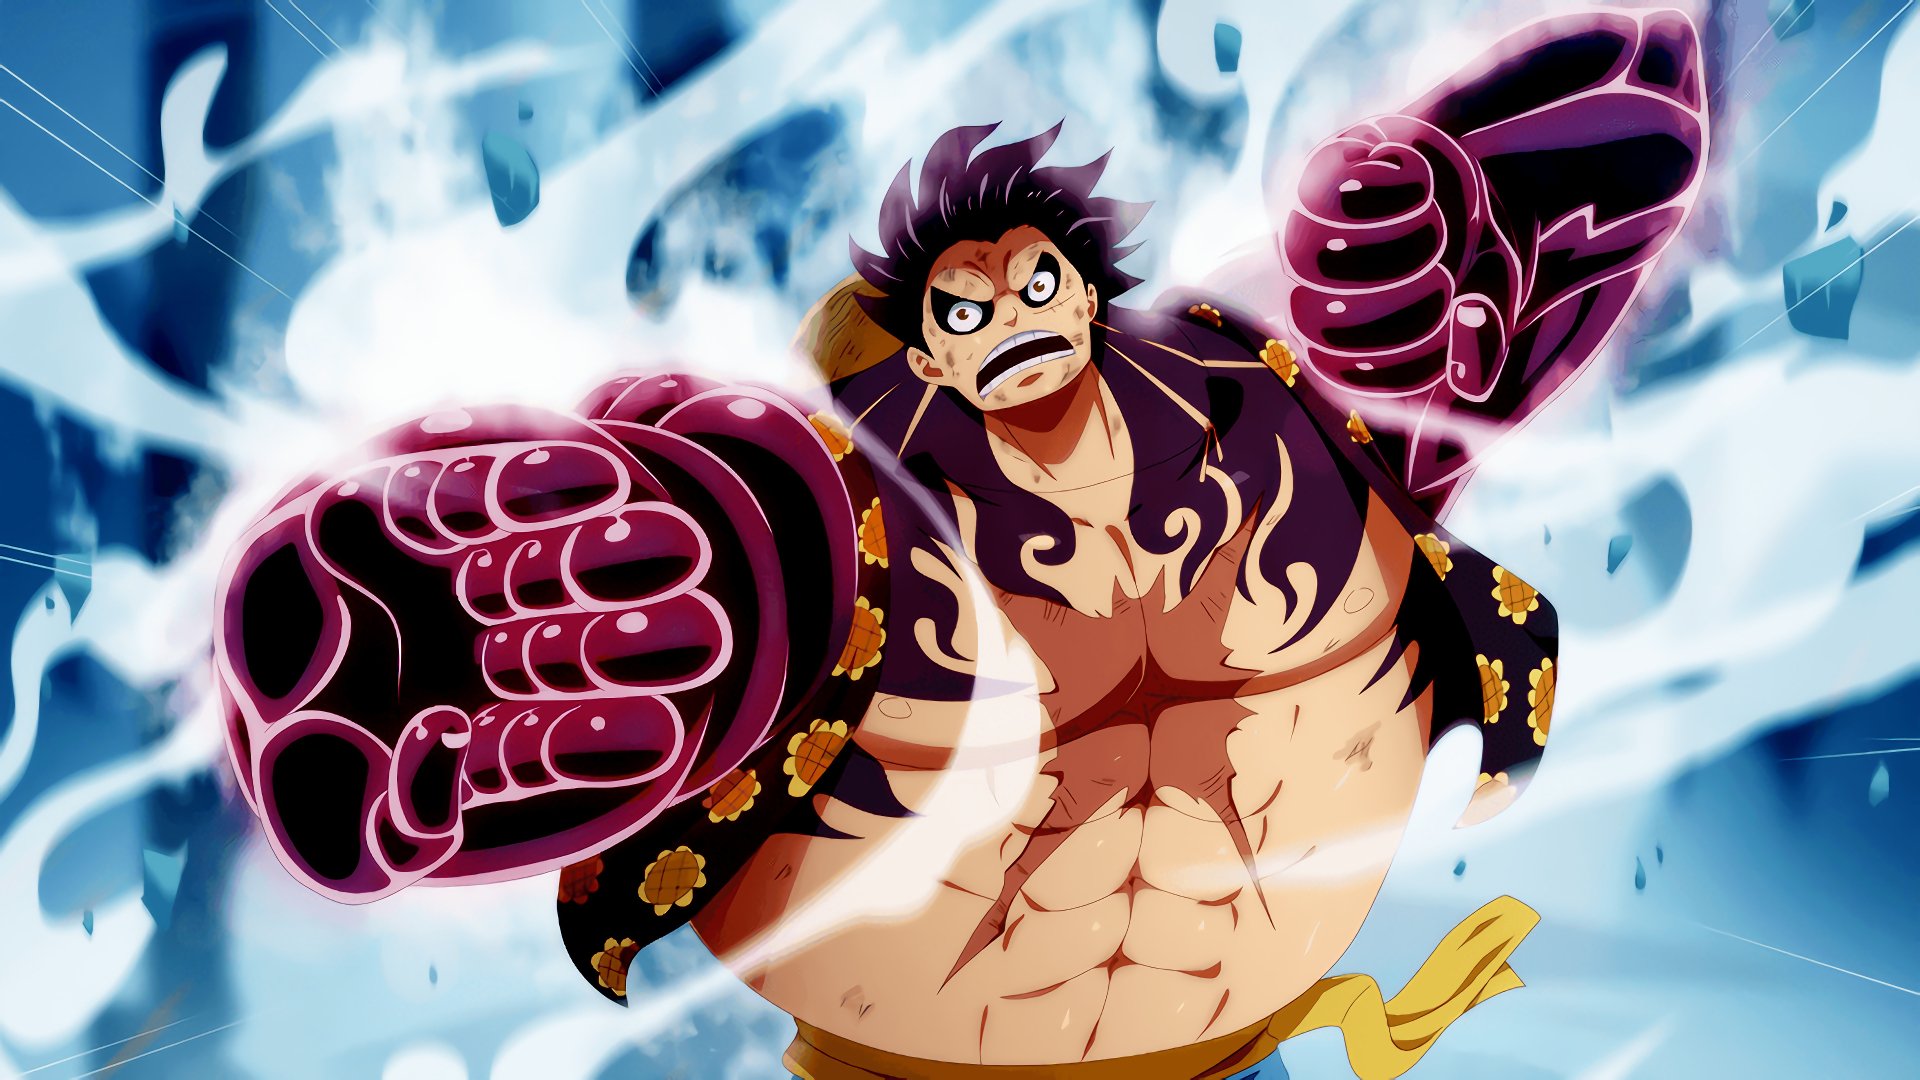 Download Gear Fourth Monkey D. Luffy Anime One Piece 4k Ultra HD Wallpaper